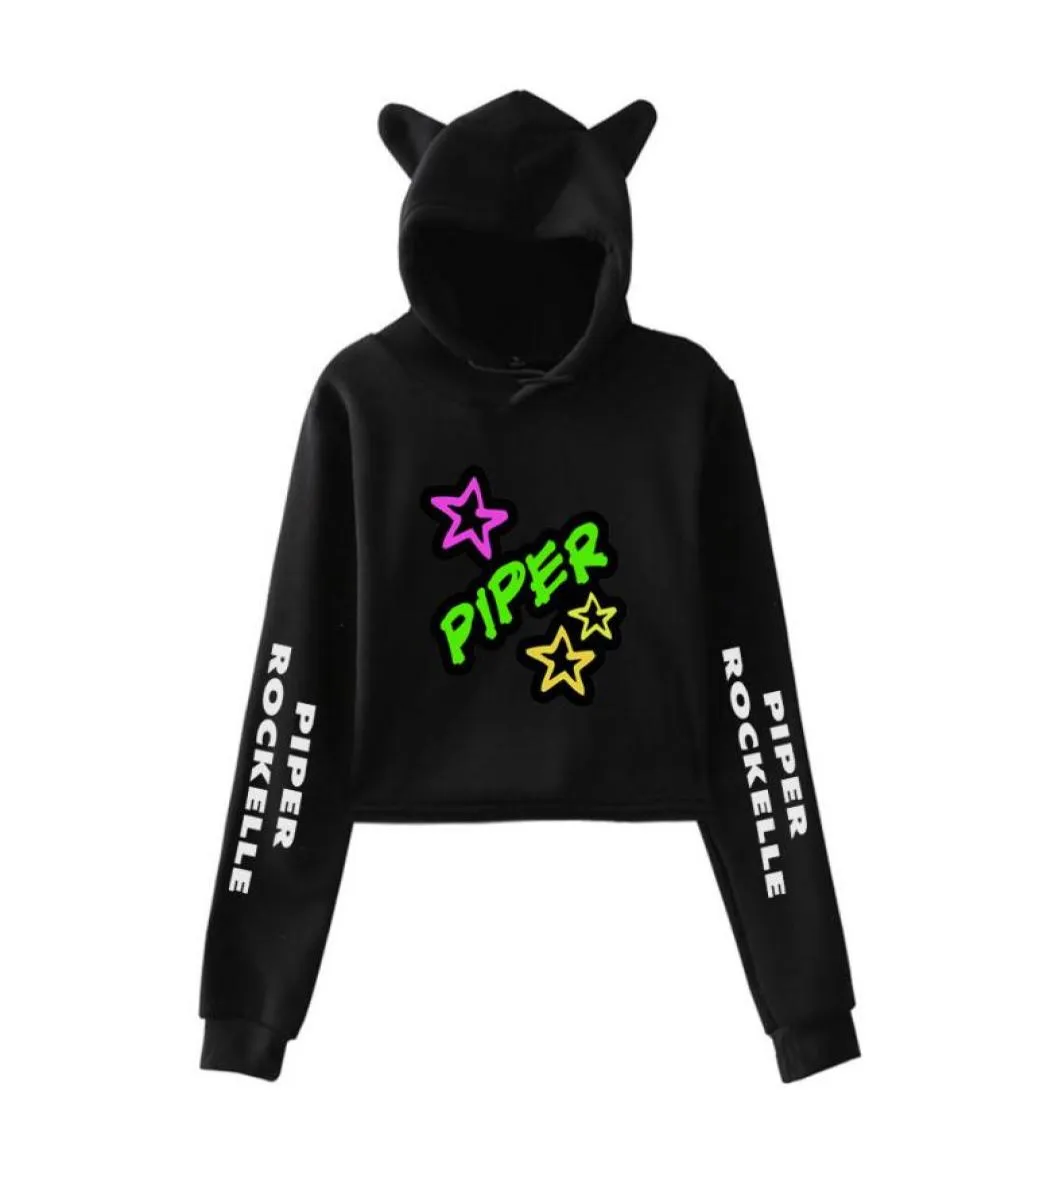 Piper Rockelle Merch Crop Top Hoodie Hip Hop Streetwear Kawaii Cat Ear Harajuku bijgesneden sweatshirt pullover tops Ropa Mujer5295987